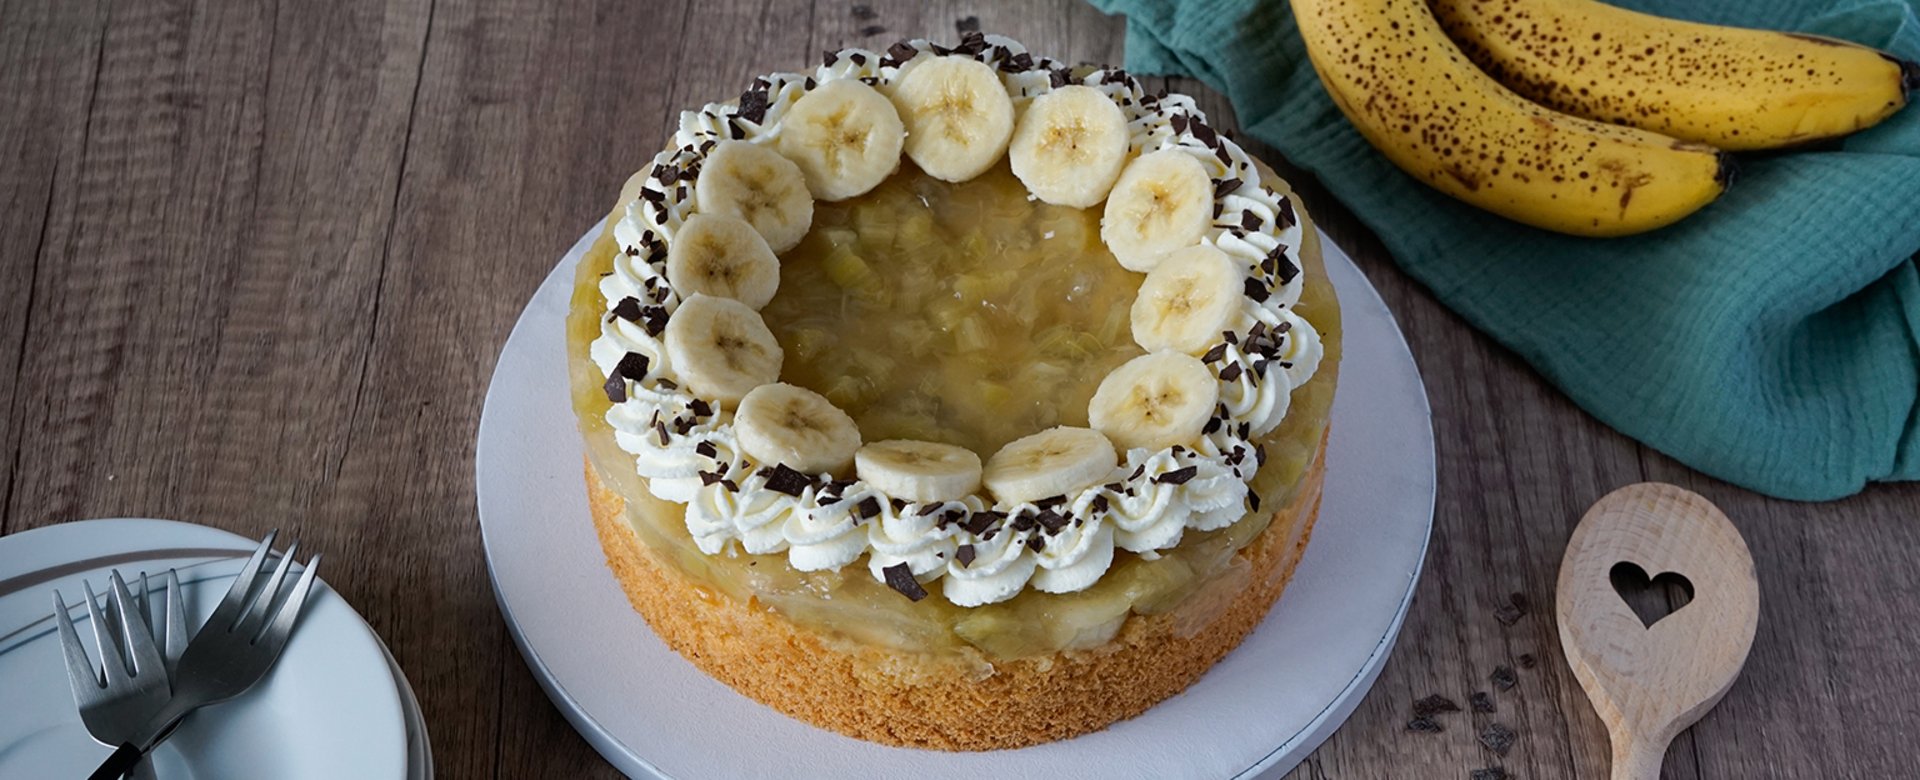 Bananen-Rhabarber-Torte